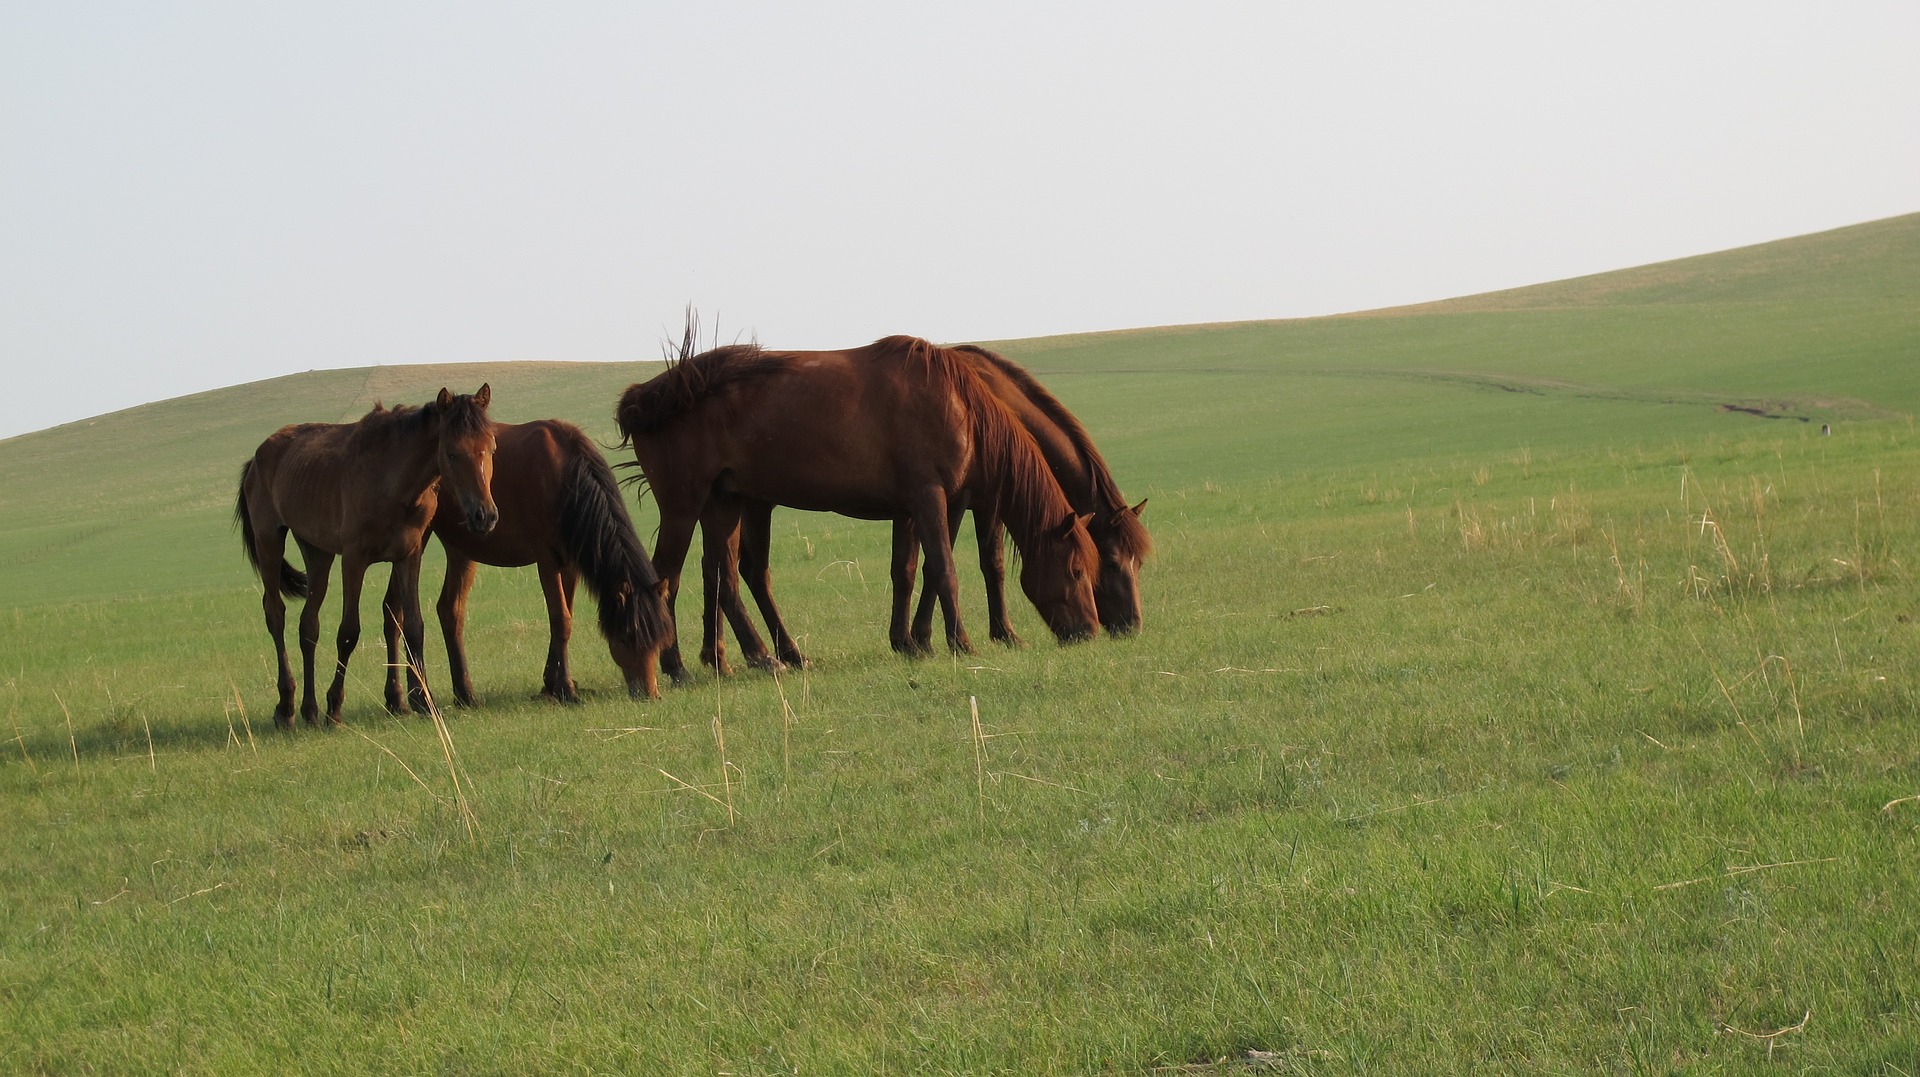 mongolia-horse-1439556_1920.jpg